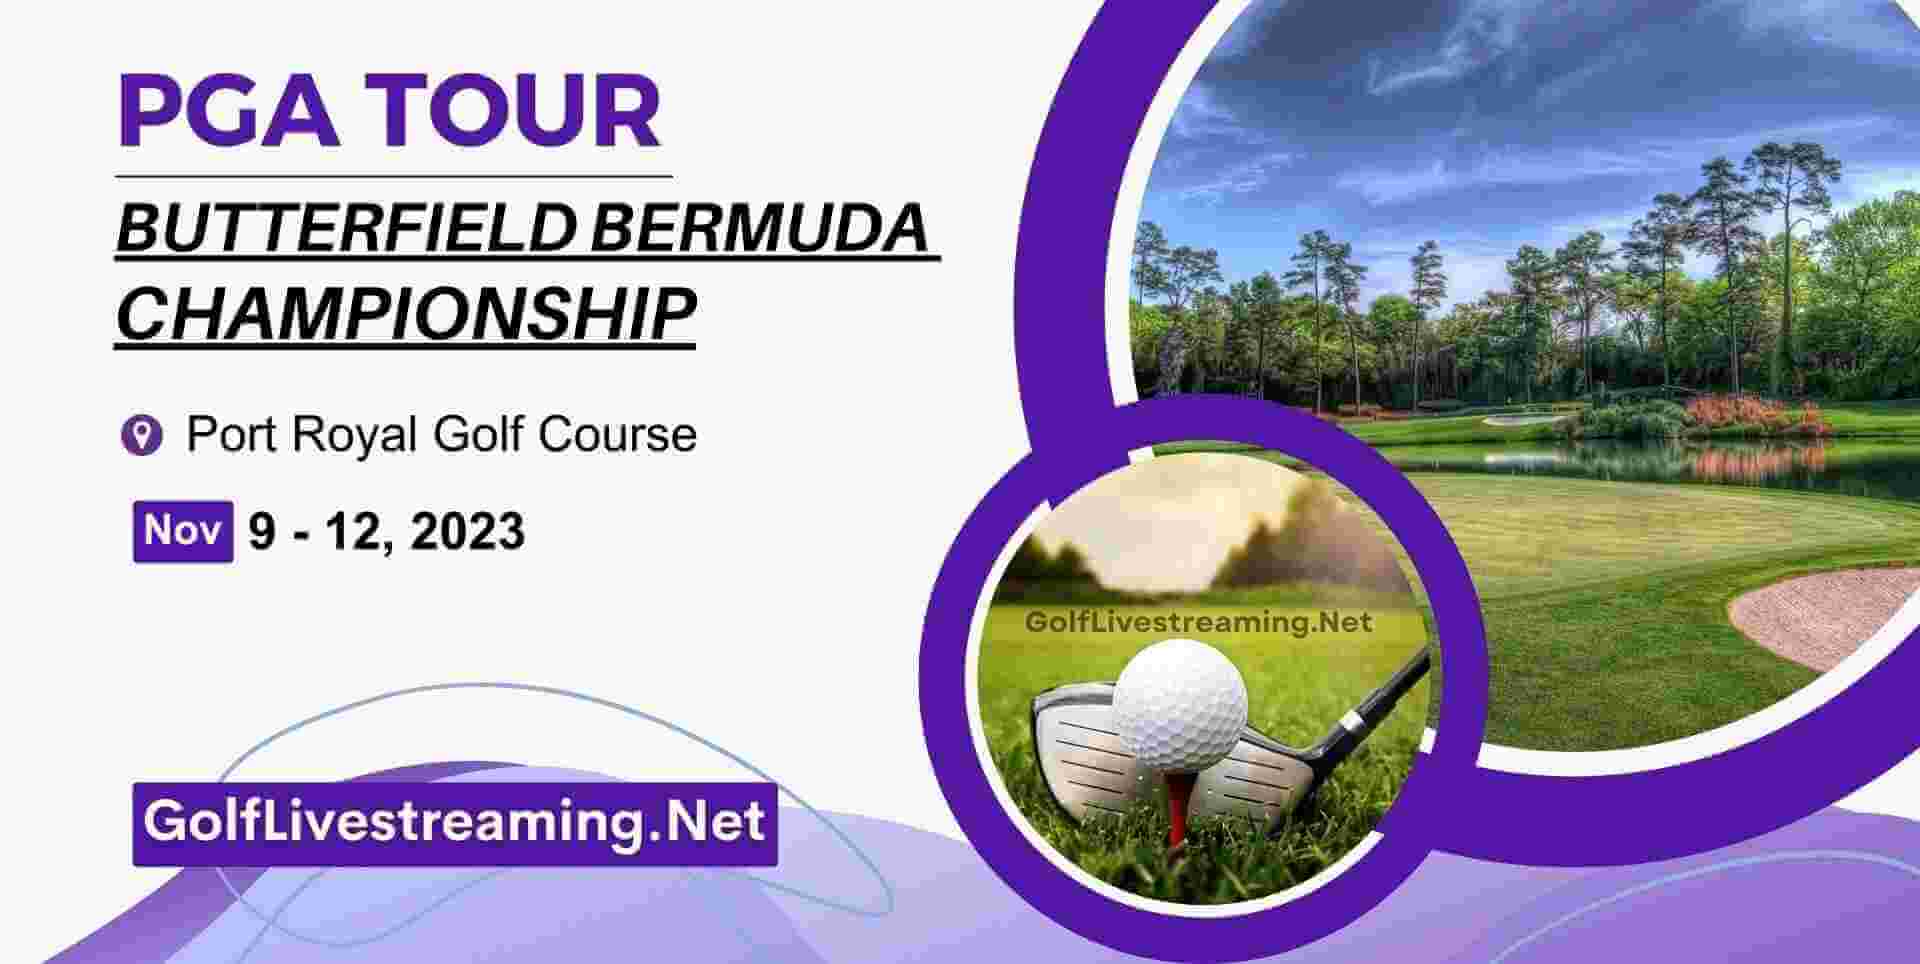 How To Watch Bermuda Championship Live Stream